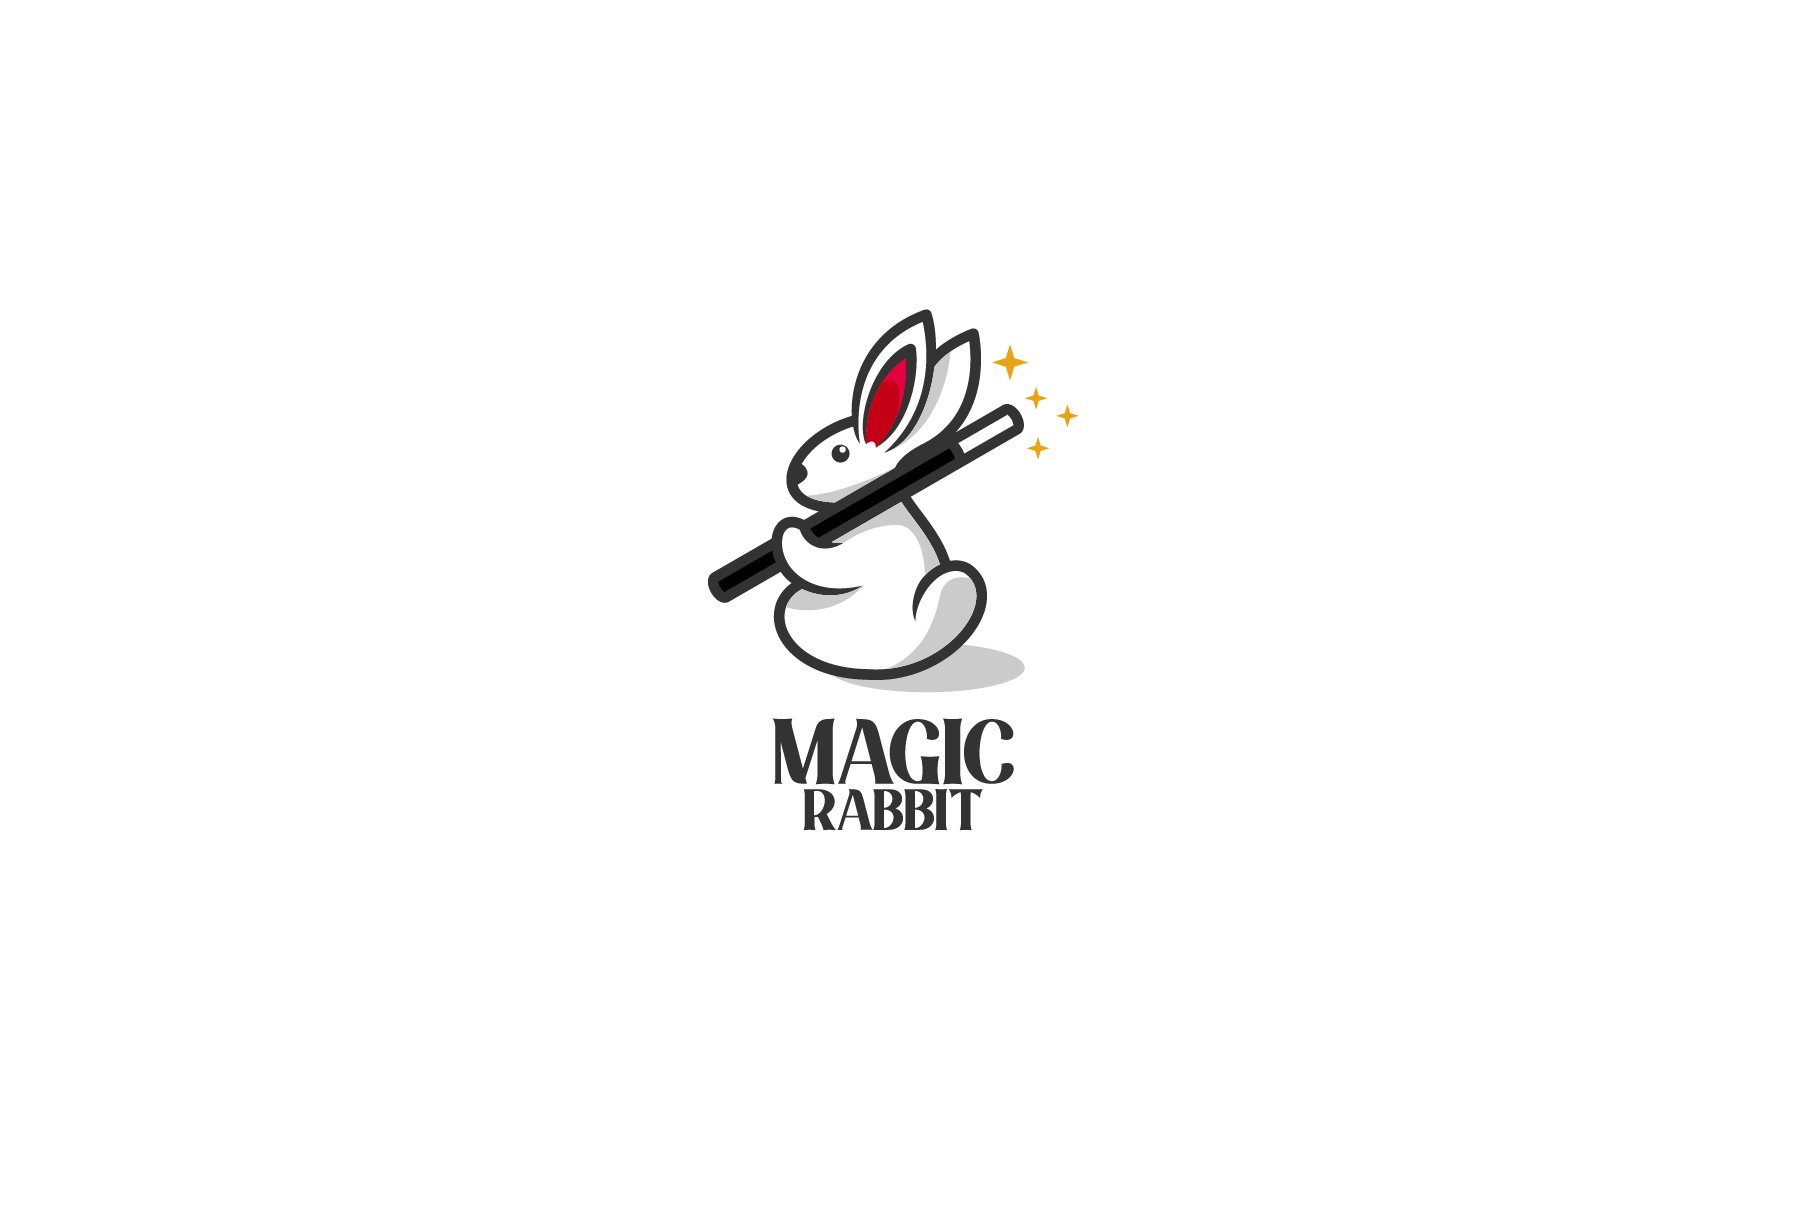 Magician Rabbit Vector Design Illust cover image.